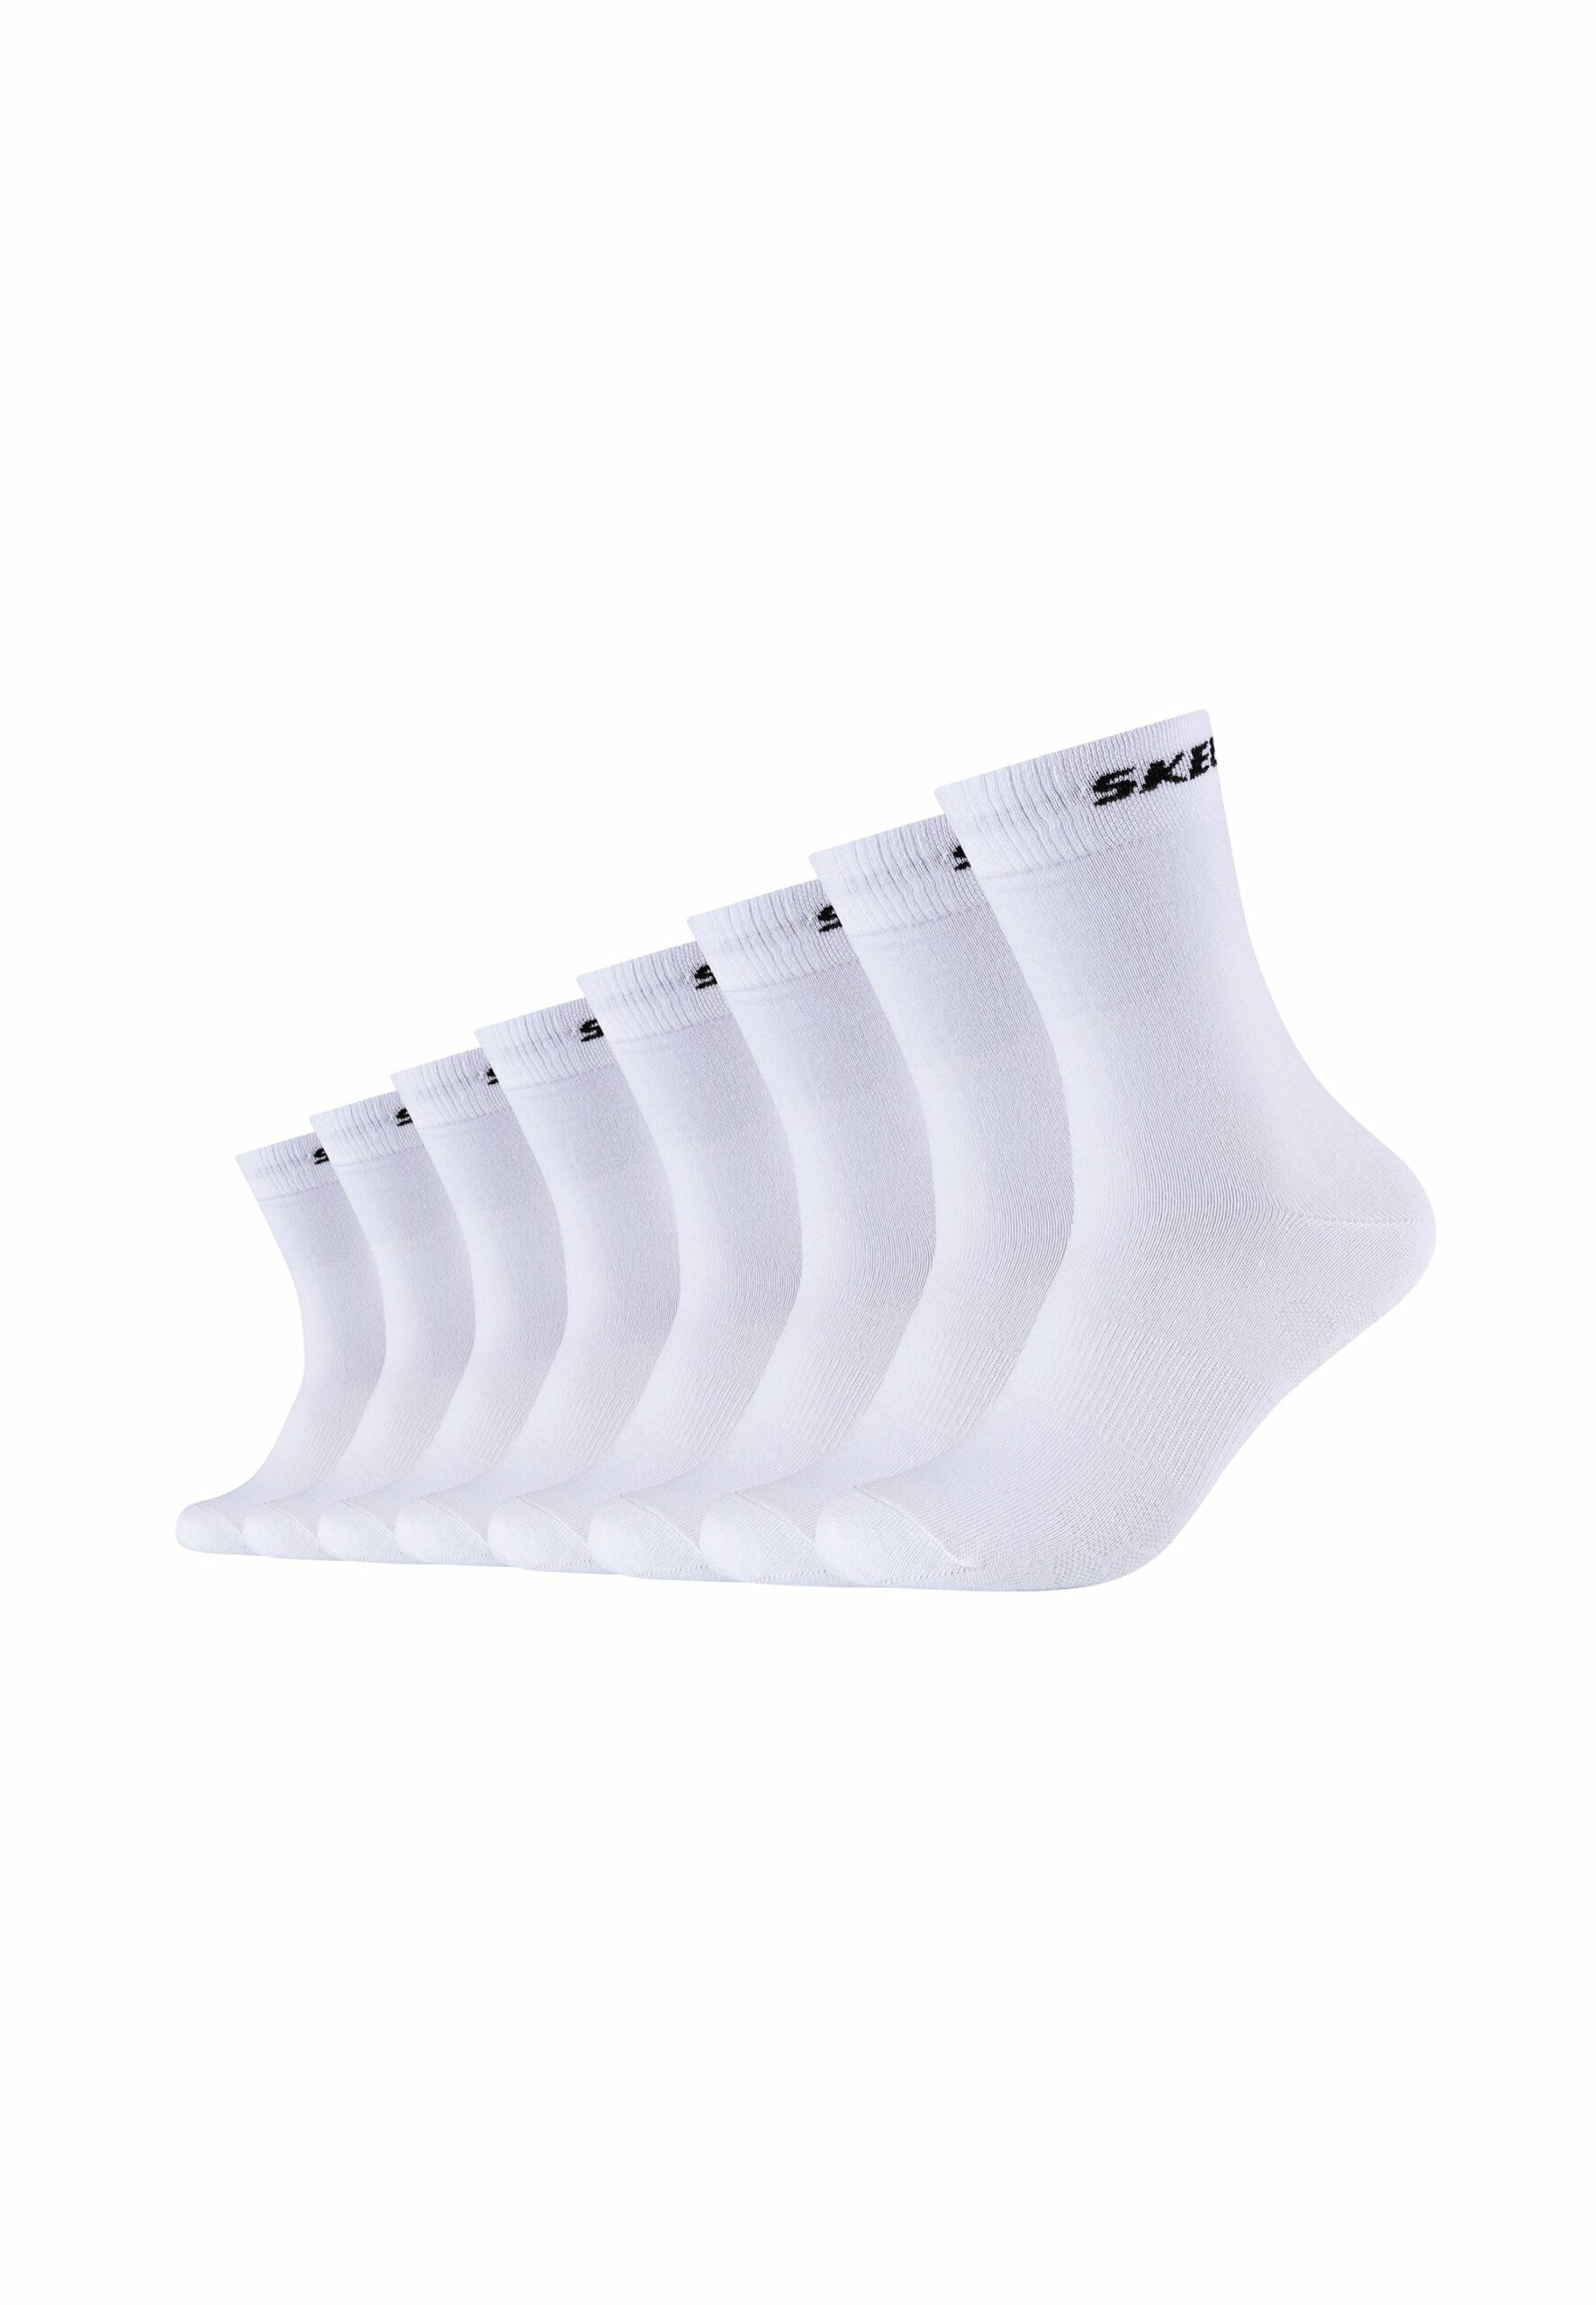 Skechers Socken Mesh Ventilation 8er white bei Pack organic kaufen